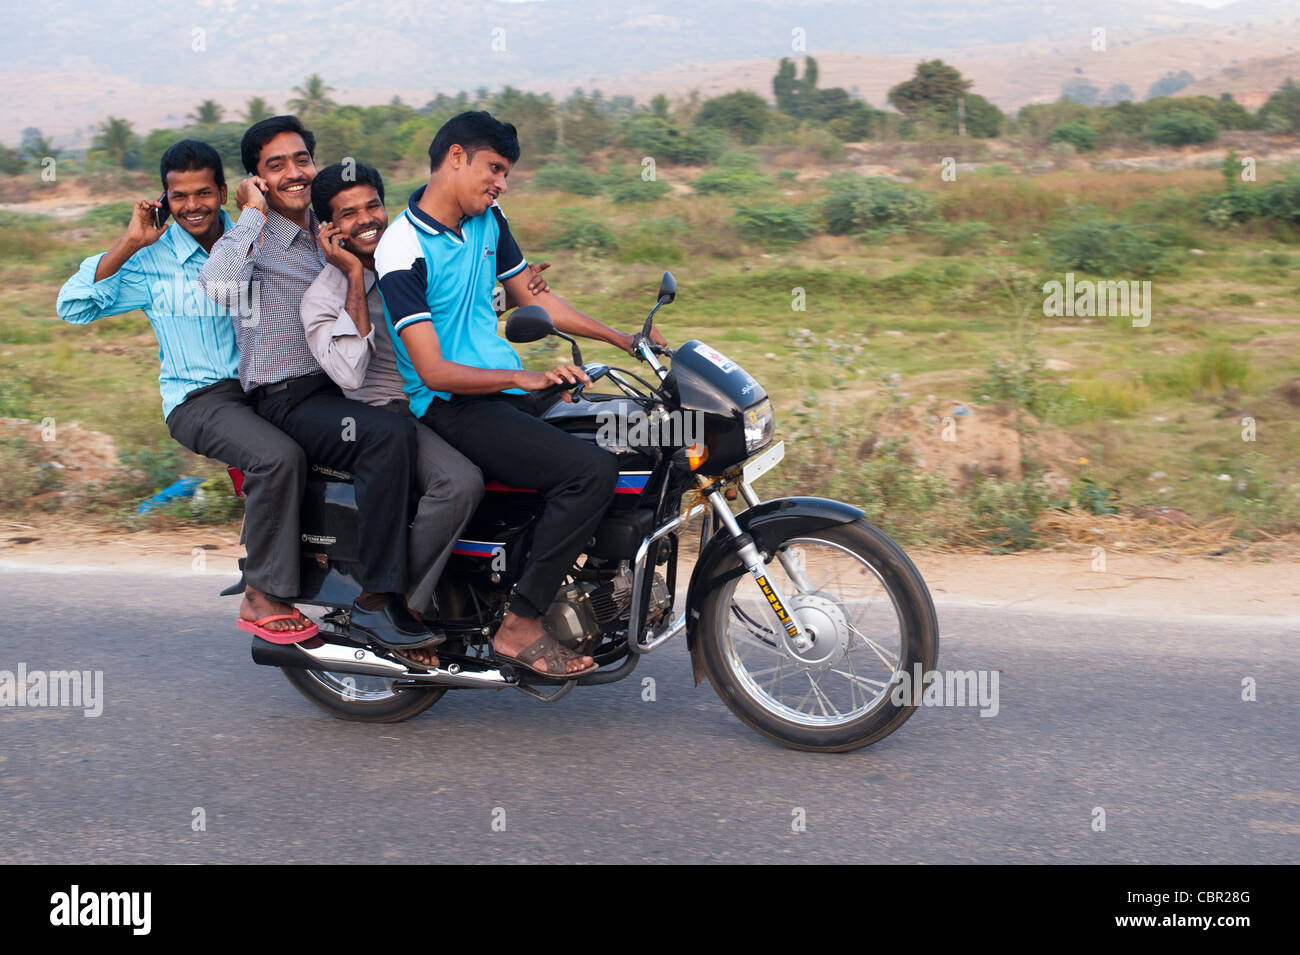 https://c8.alamy.com/comp/CBR28G/four-indian-men-on-a-motorcycle-on-their-mobile-phones-andhra-pradesh-CBR28G.jpg